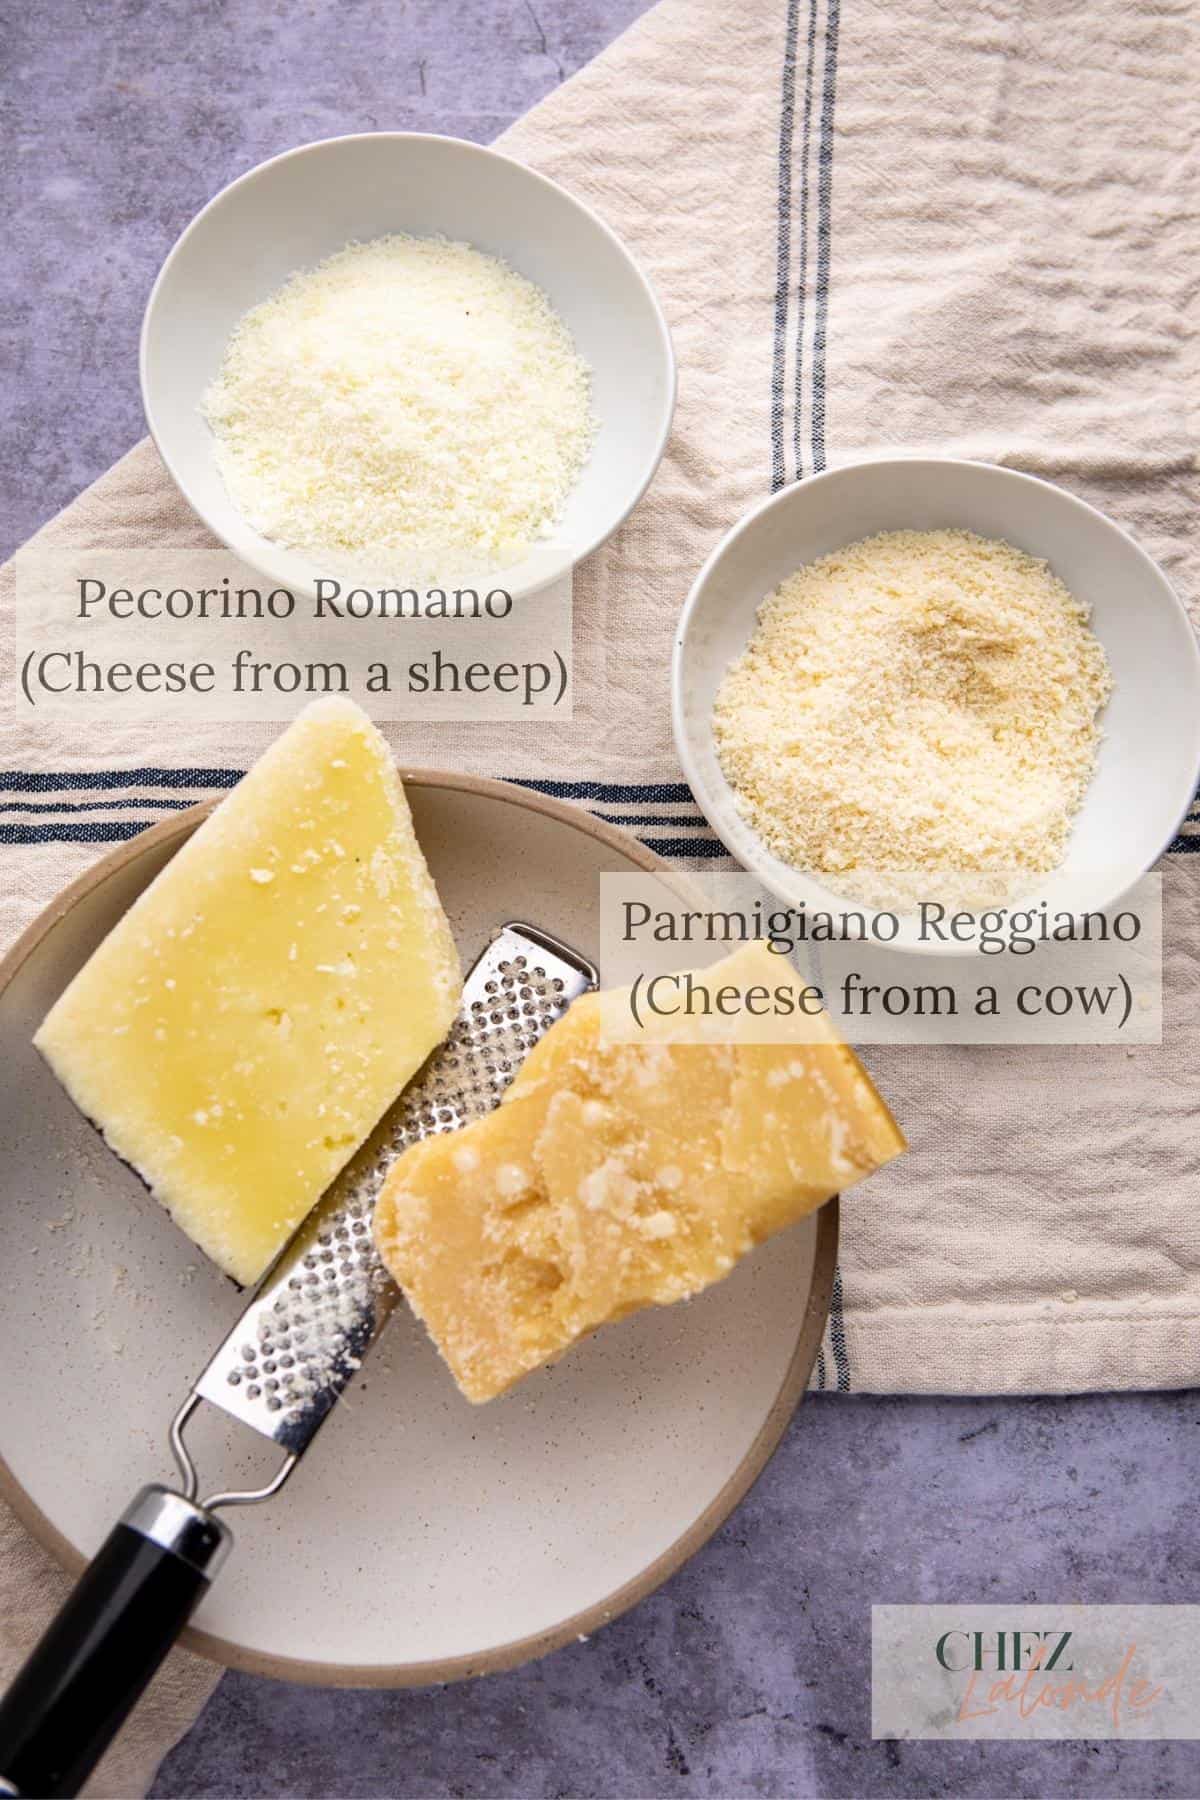 2 Pecorino Romano and Parmigiano Reggiano cheese blocks and 2 bowl of grated cheese.